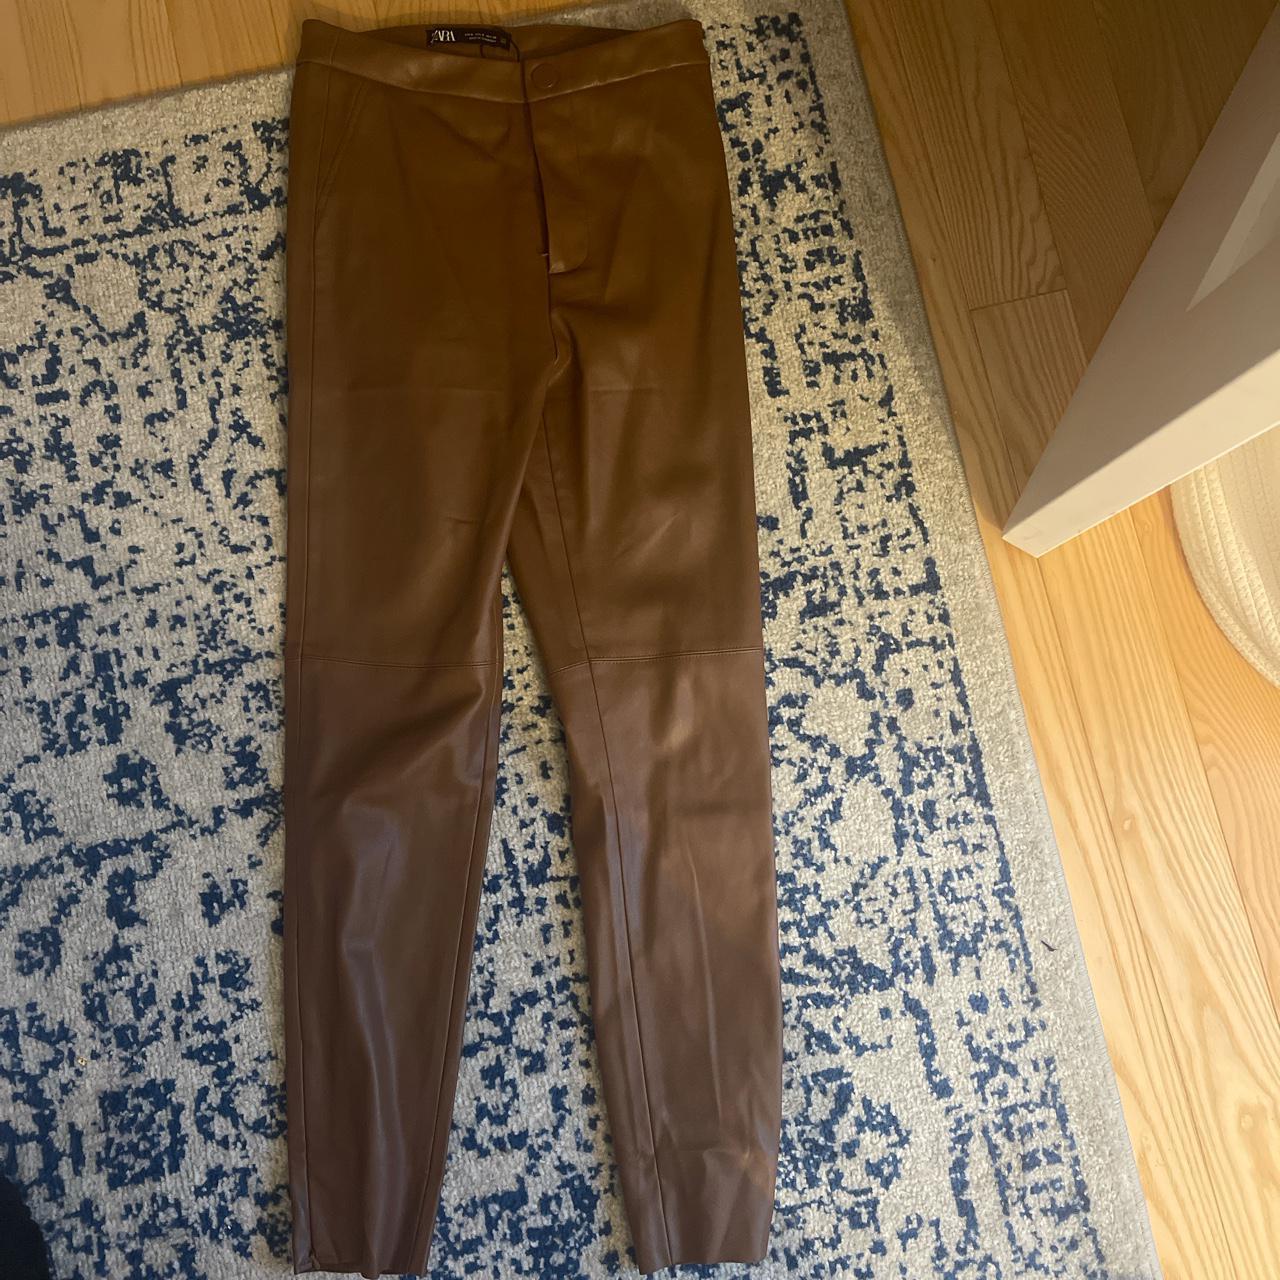 Zara brown leather pants size S #fall #nee #zara - Depop